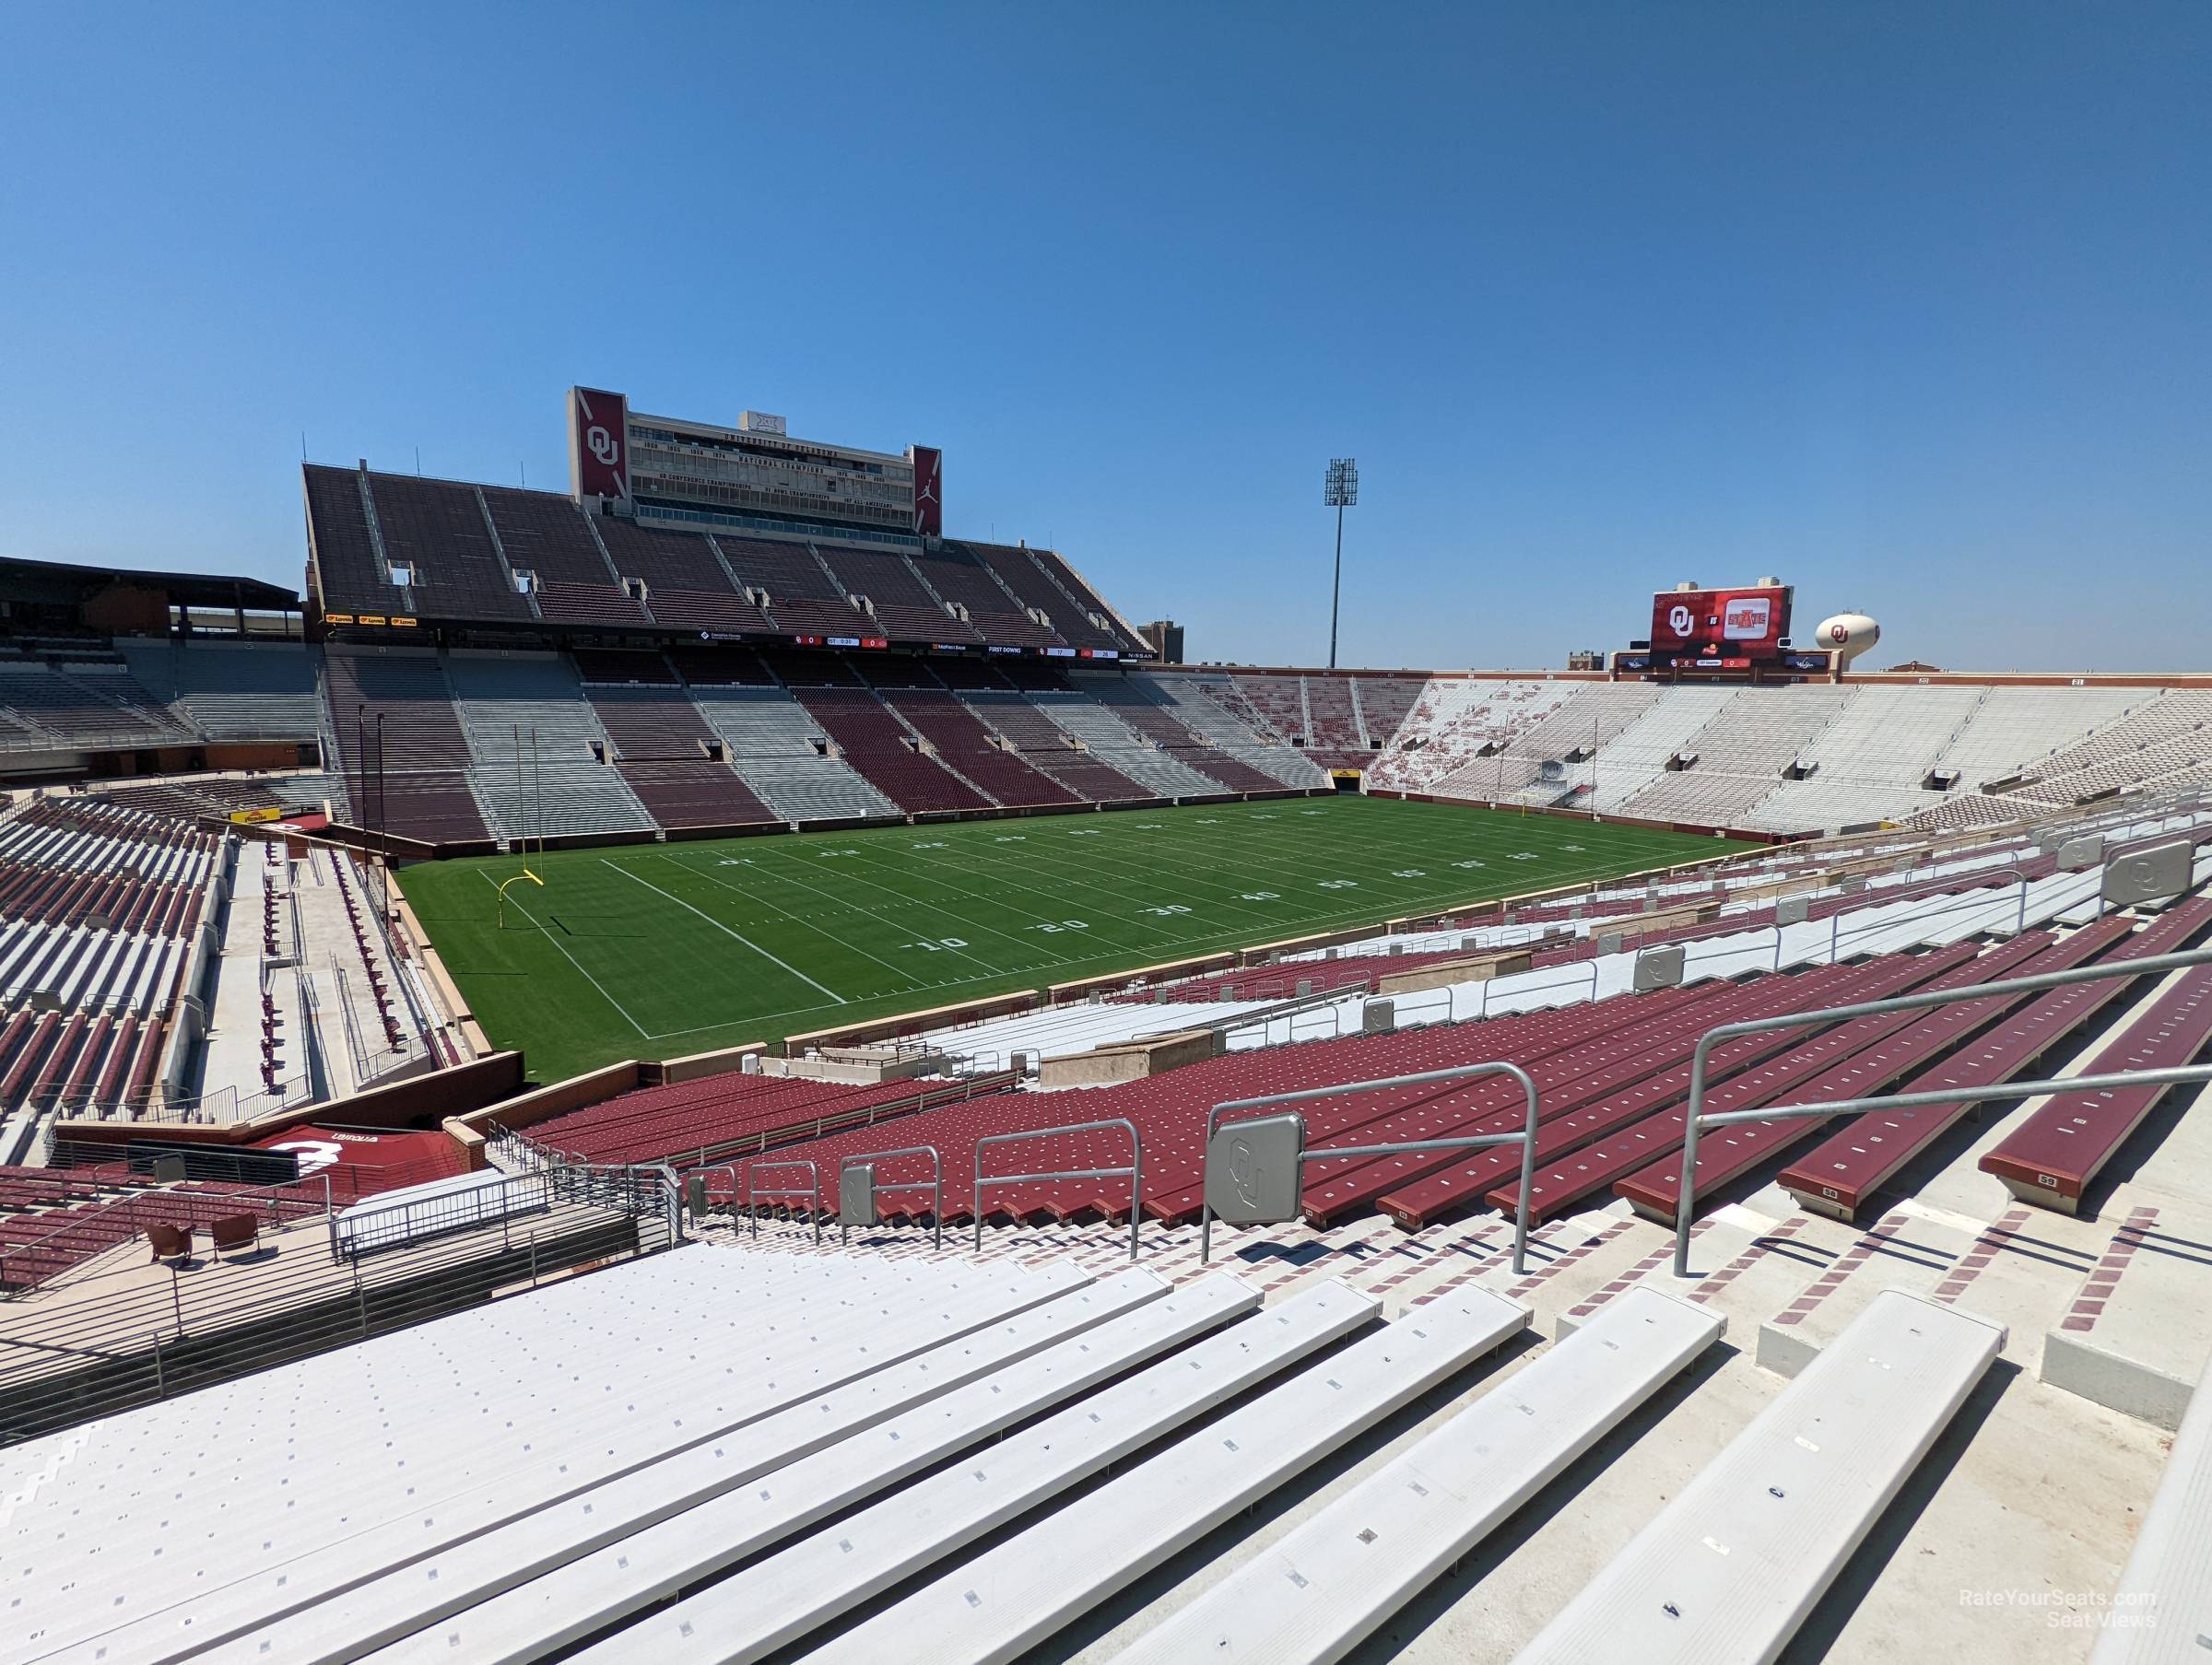 section 36, row 60 seat view  - oklahoma memorial stadium